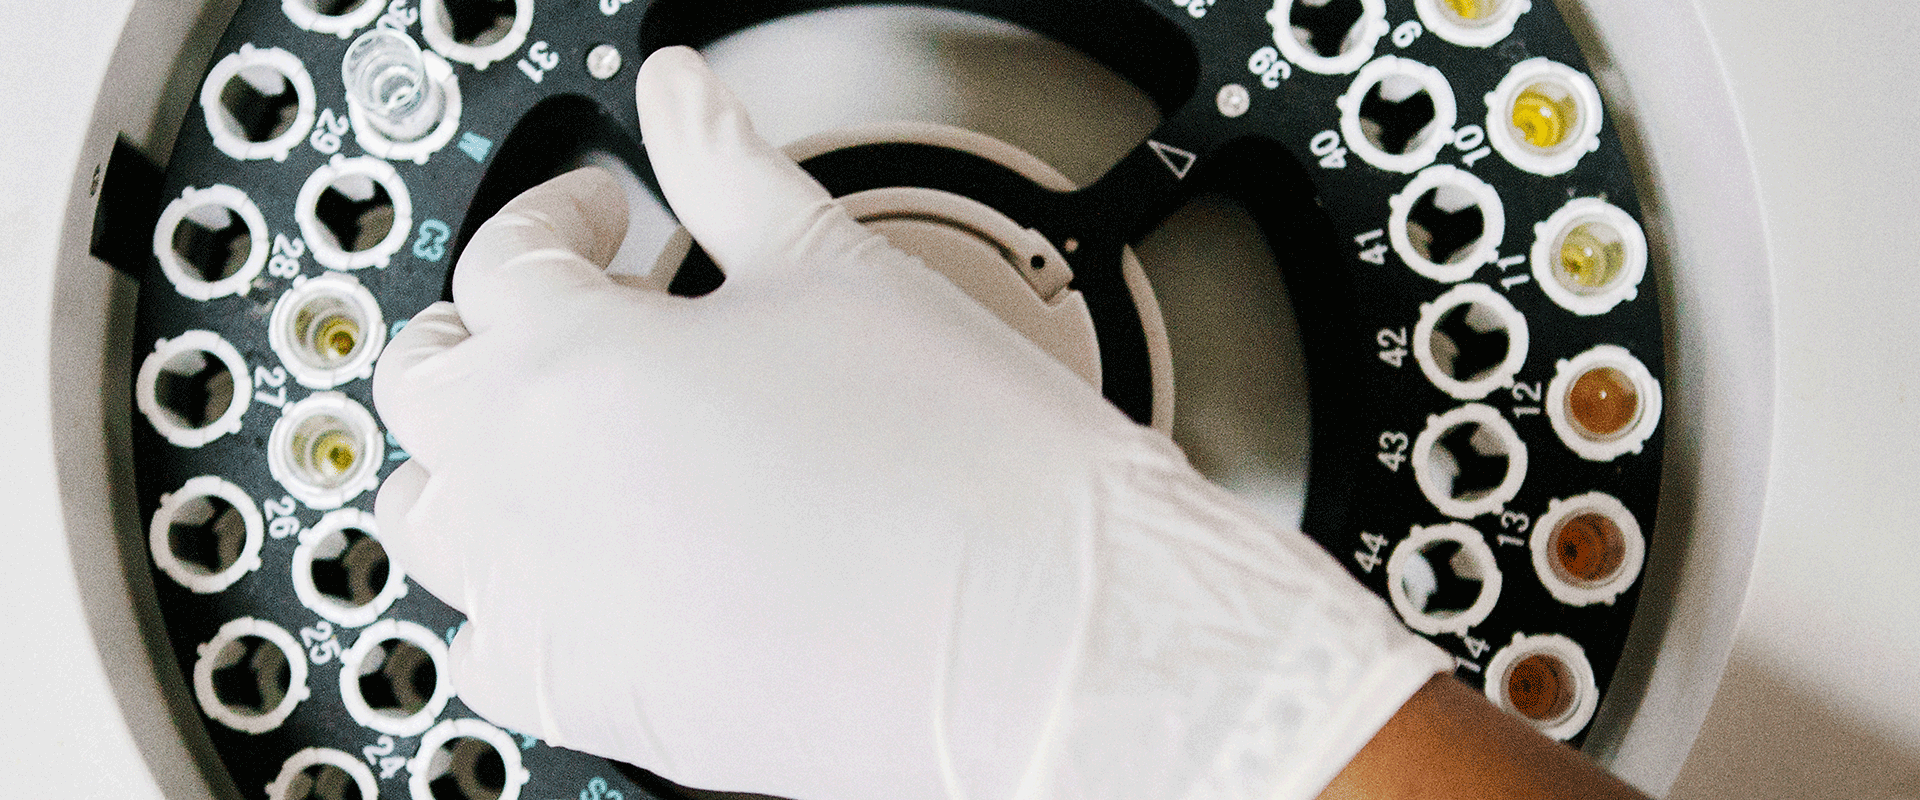 hand on centrifuge